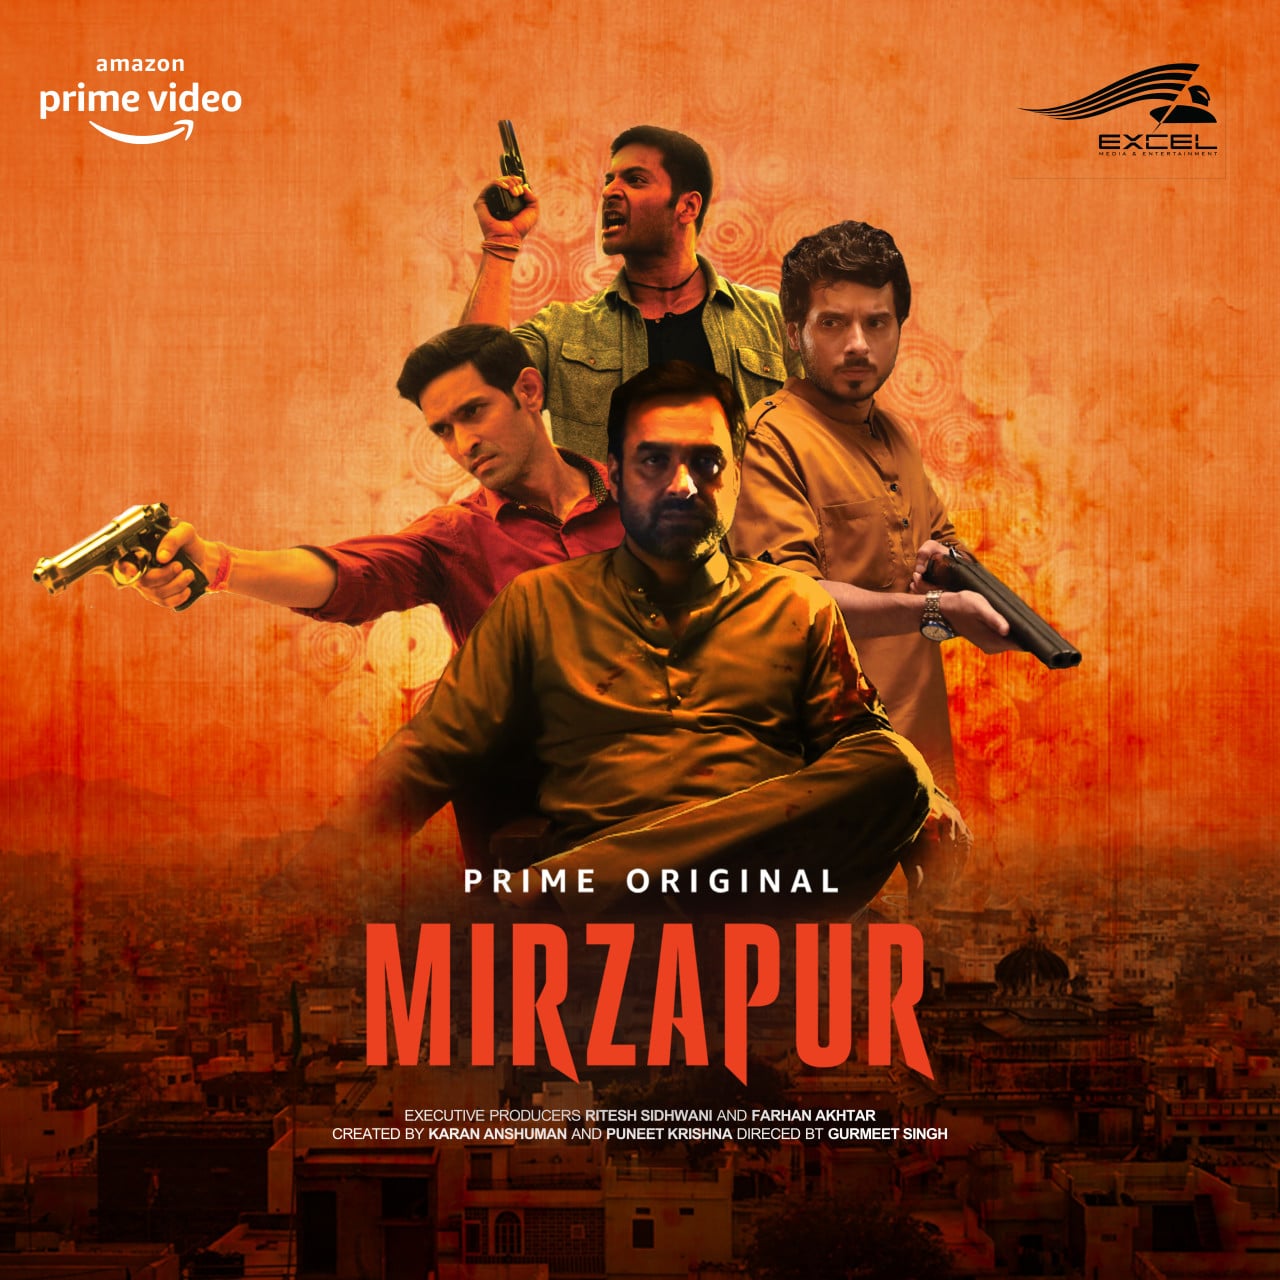 Mirzapur Cast, Actors, Producer, Director, Roles, Salary - Super Stars Bio